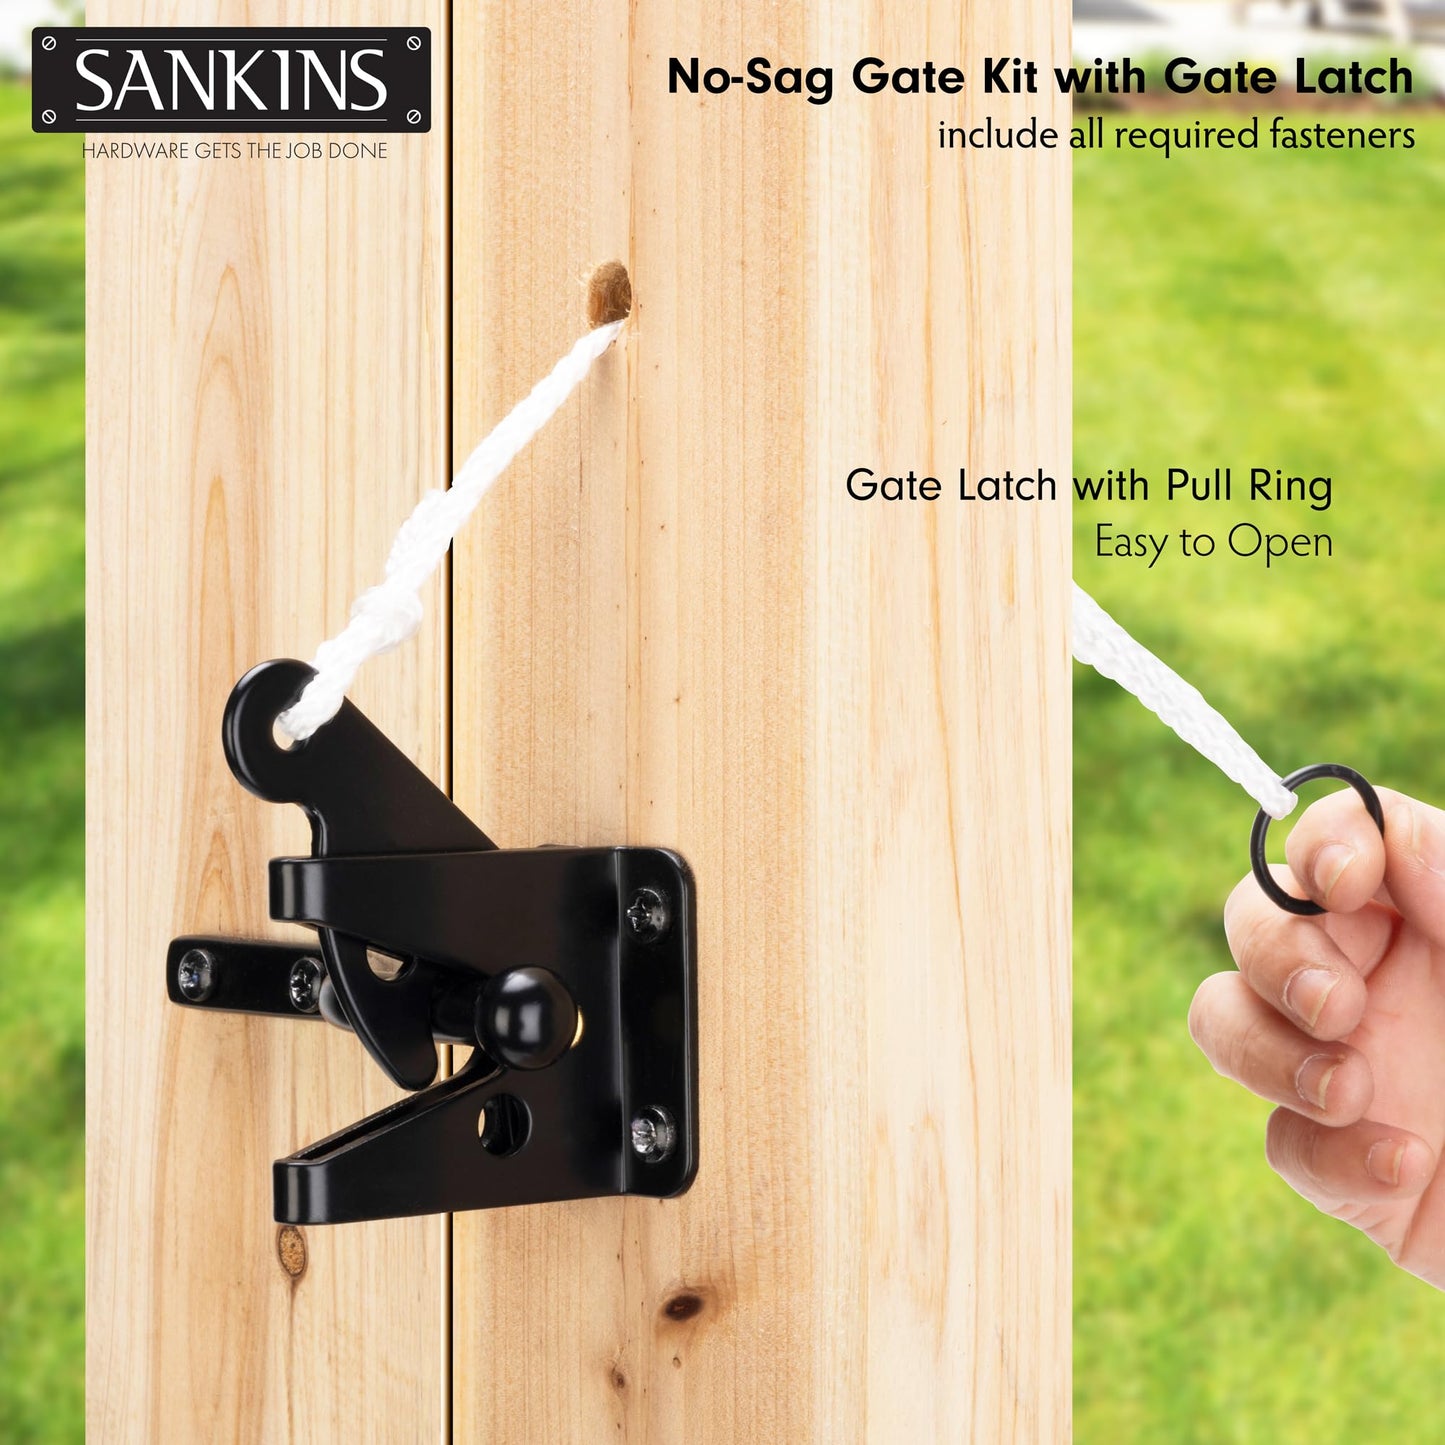 SANKINS 2 Set Anti Sag Gate Corner Brace Bracket, Heavy Duty No Sag Gate Frame Kit with Self-Locking Gate Latch, Black Gate Kit for Wooden Fence,